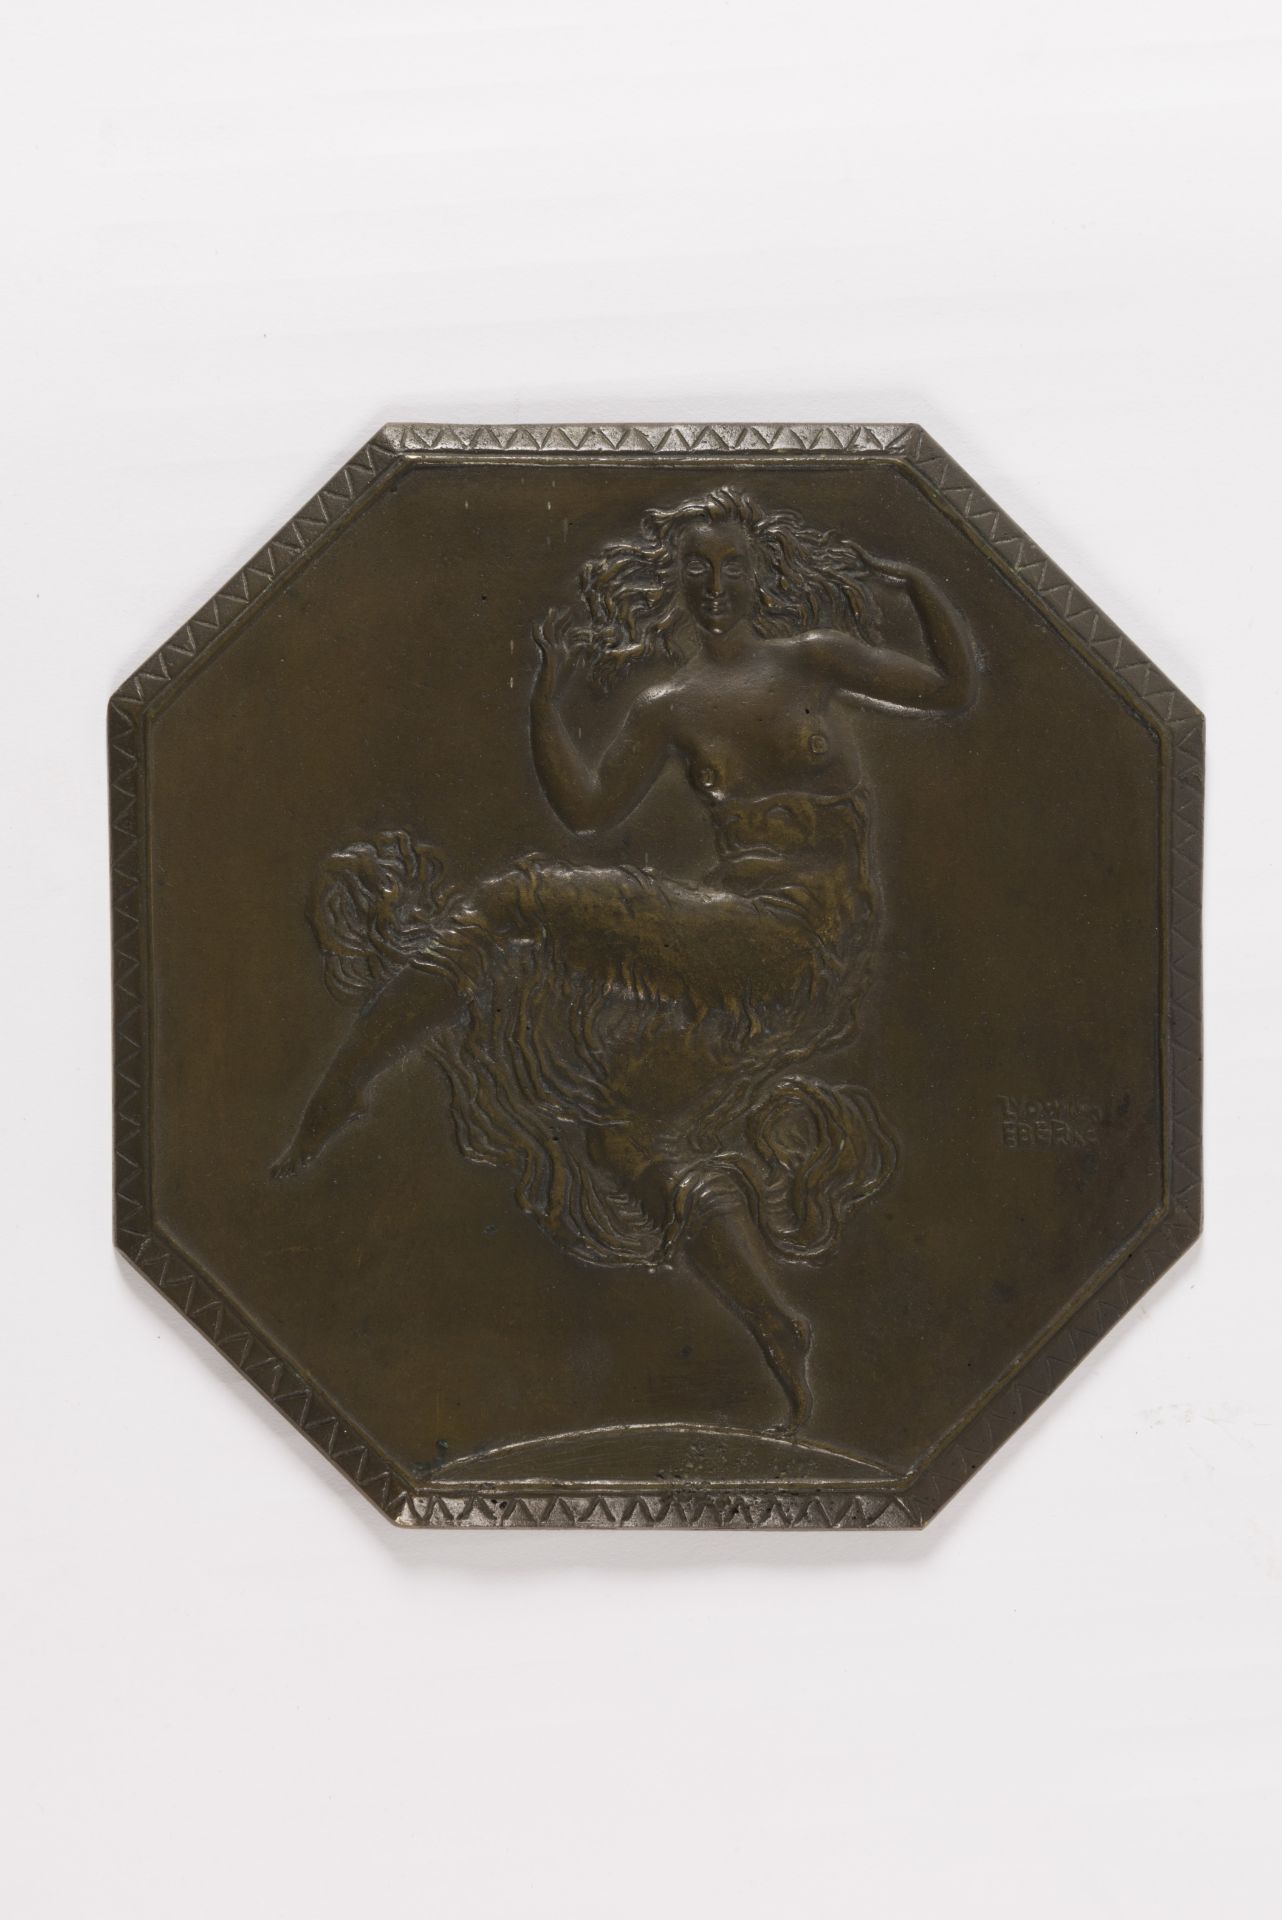 LUDWIG EBERLE (1883-1956) Bas-relief en bronze, circa 1905